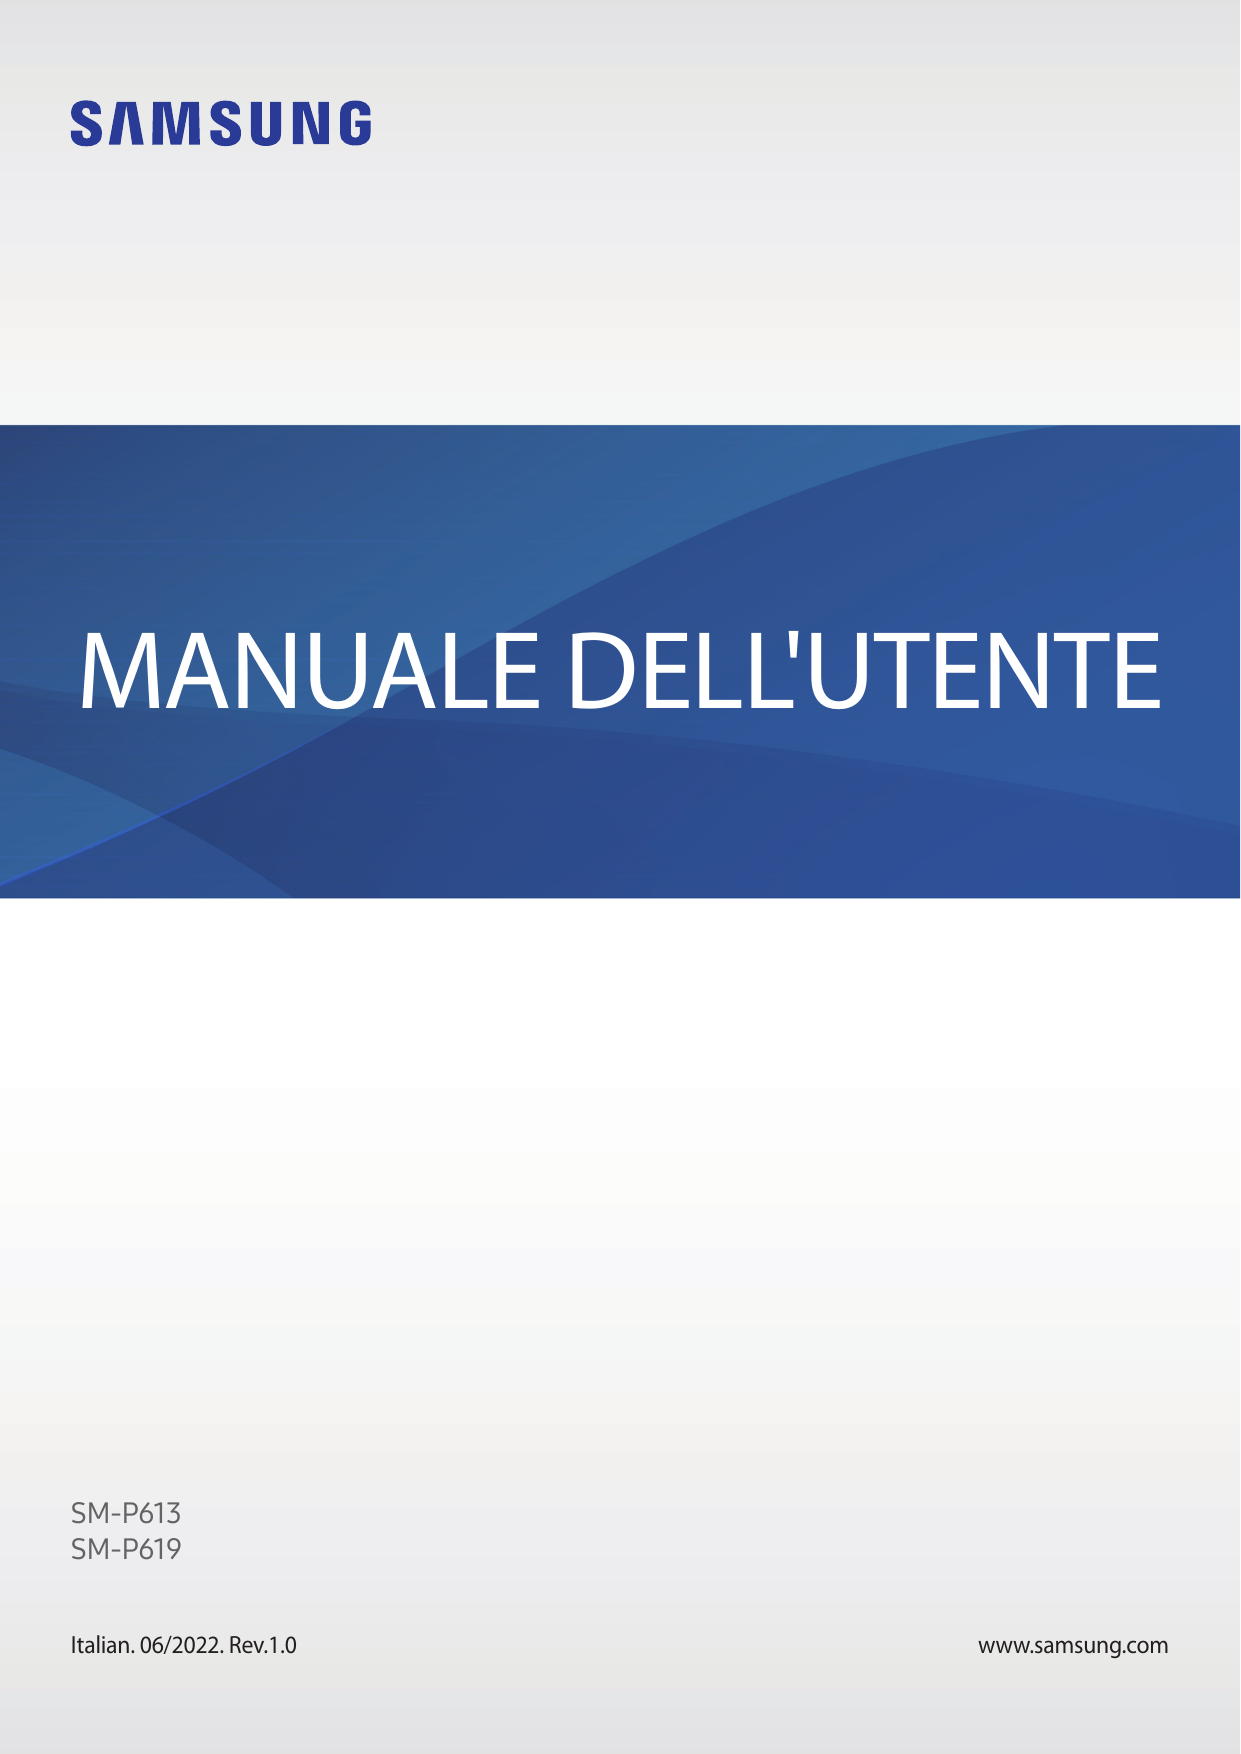 MANUALE DELL'UTENTESM-P613SM-P619Italian. 06/2022. Rev.1.0www.samsung.com